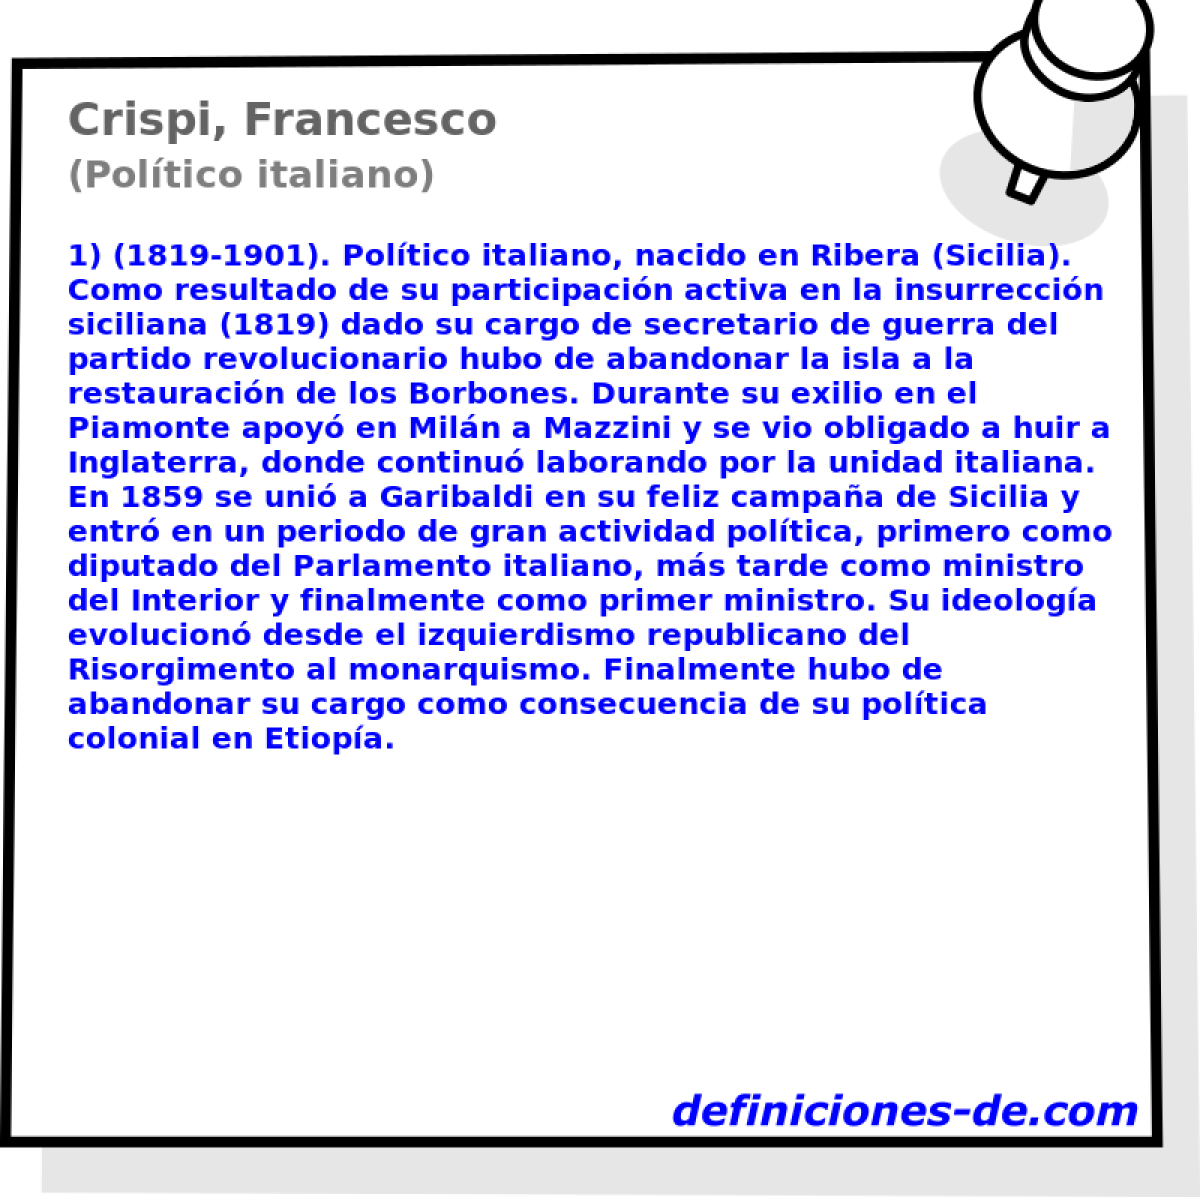 Crispi, Francesco (Poltico italiano)